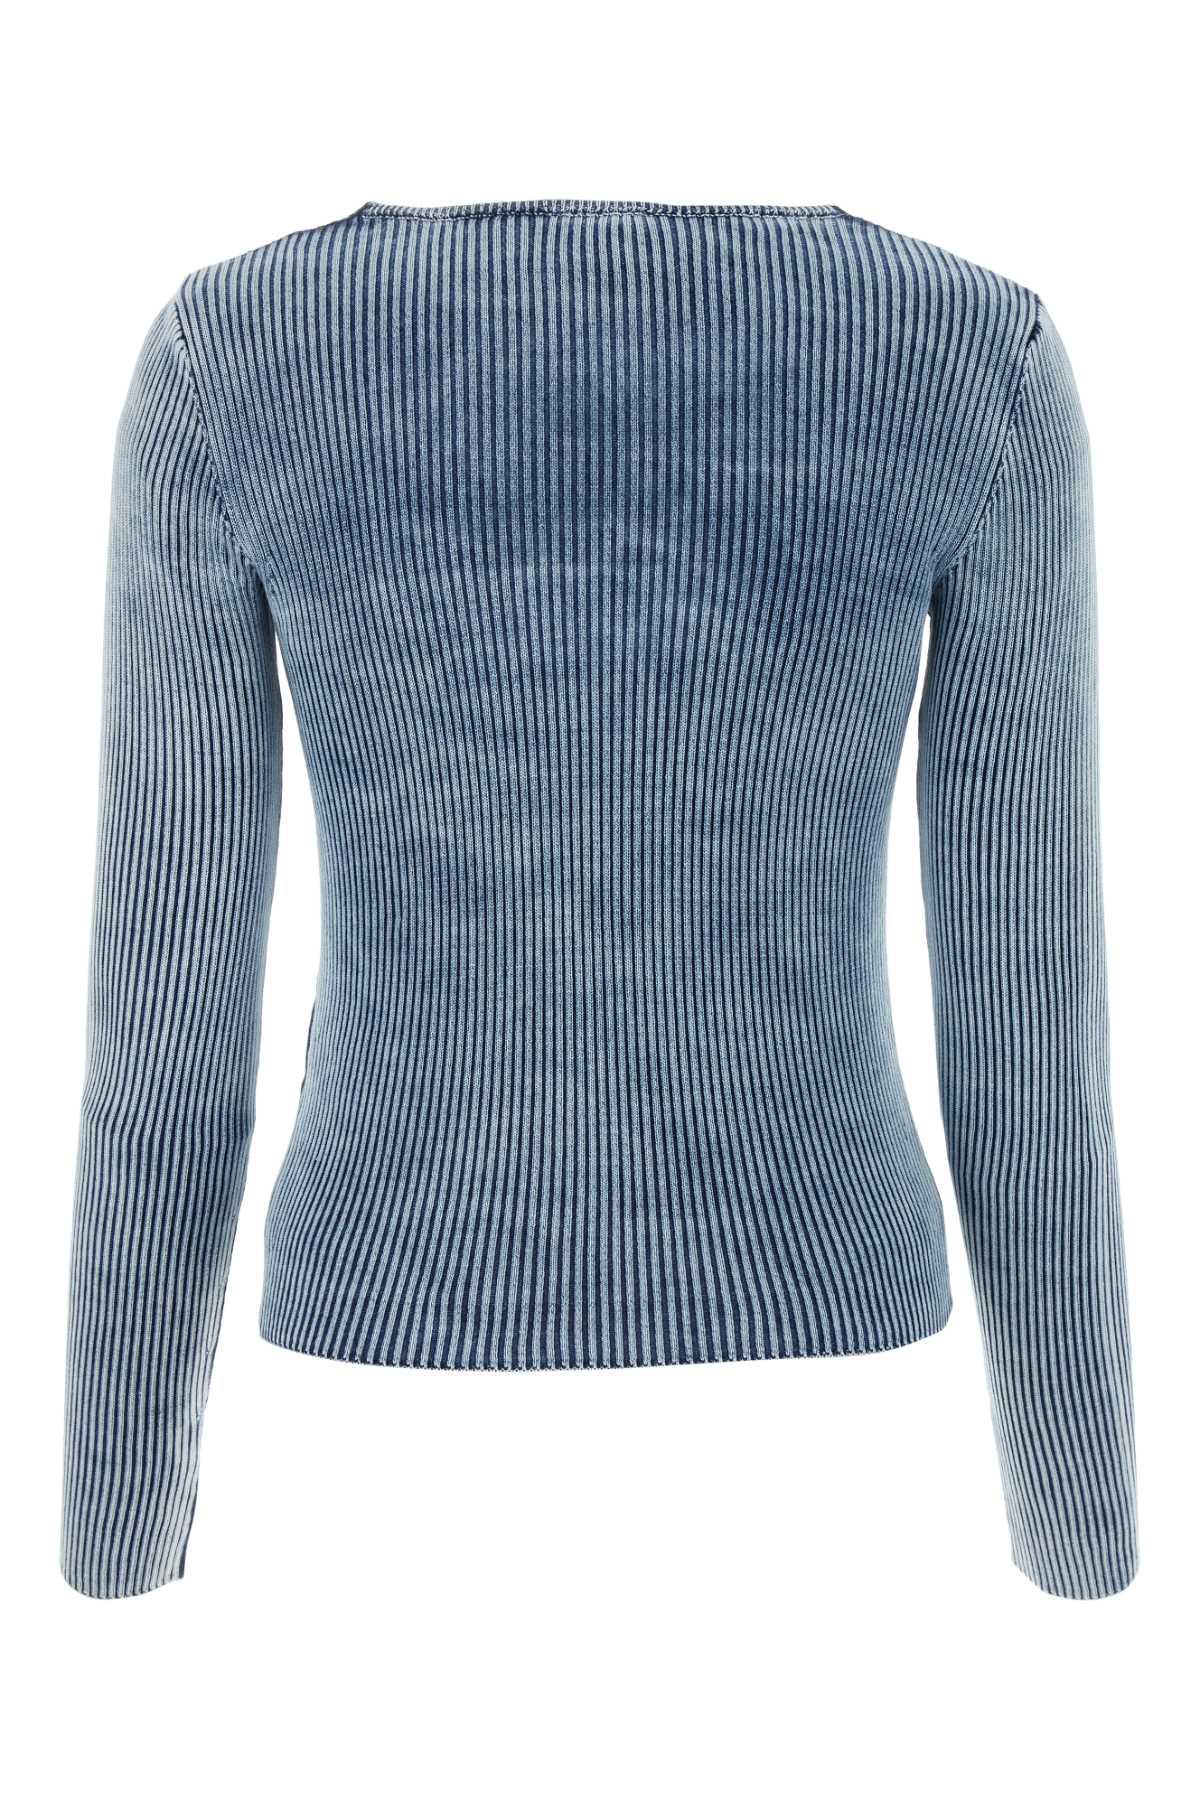 Diesel Light Blue Stretch Cotton Blend Sweater In 8nc